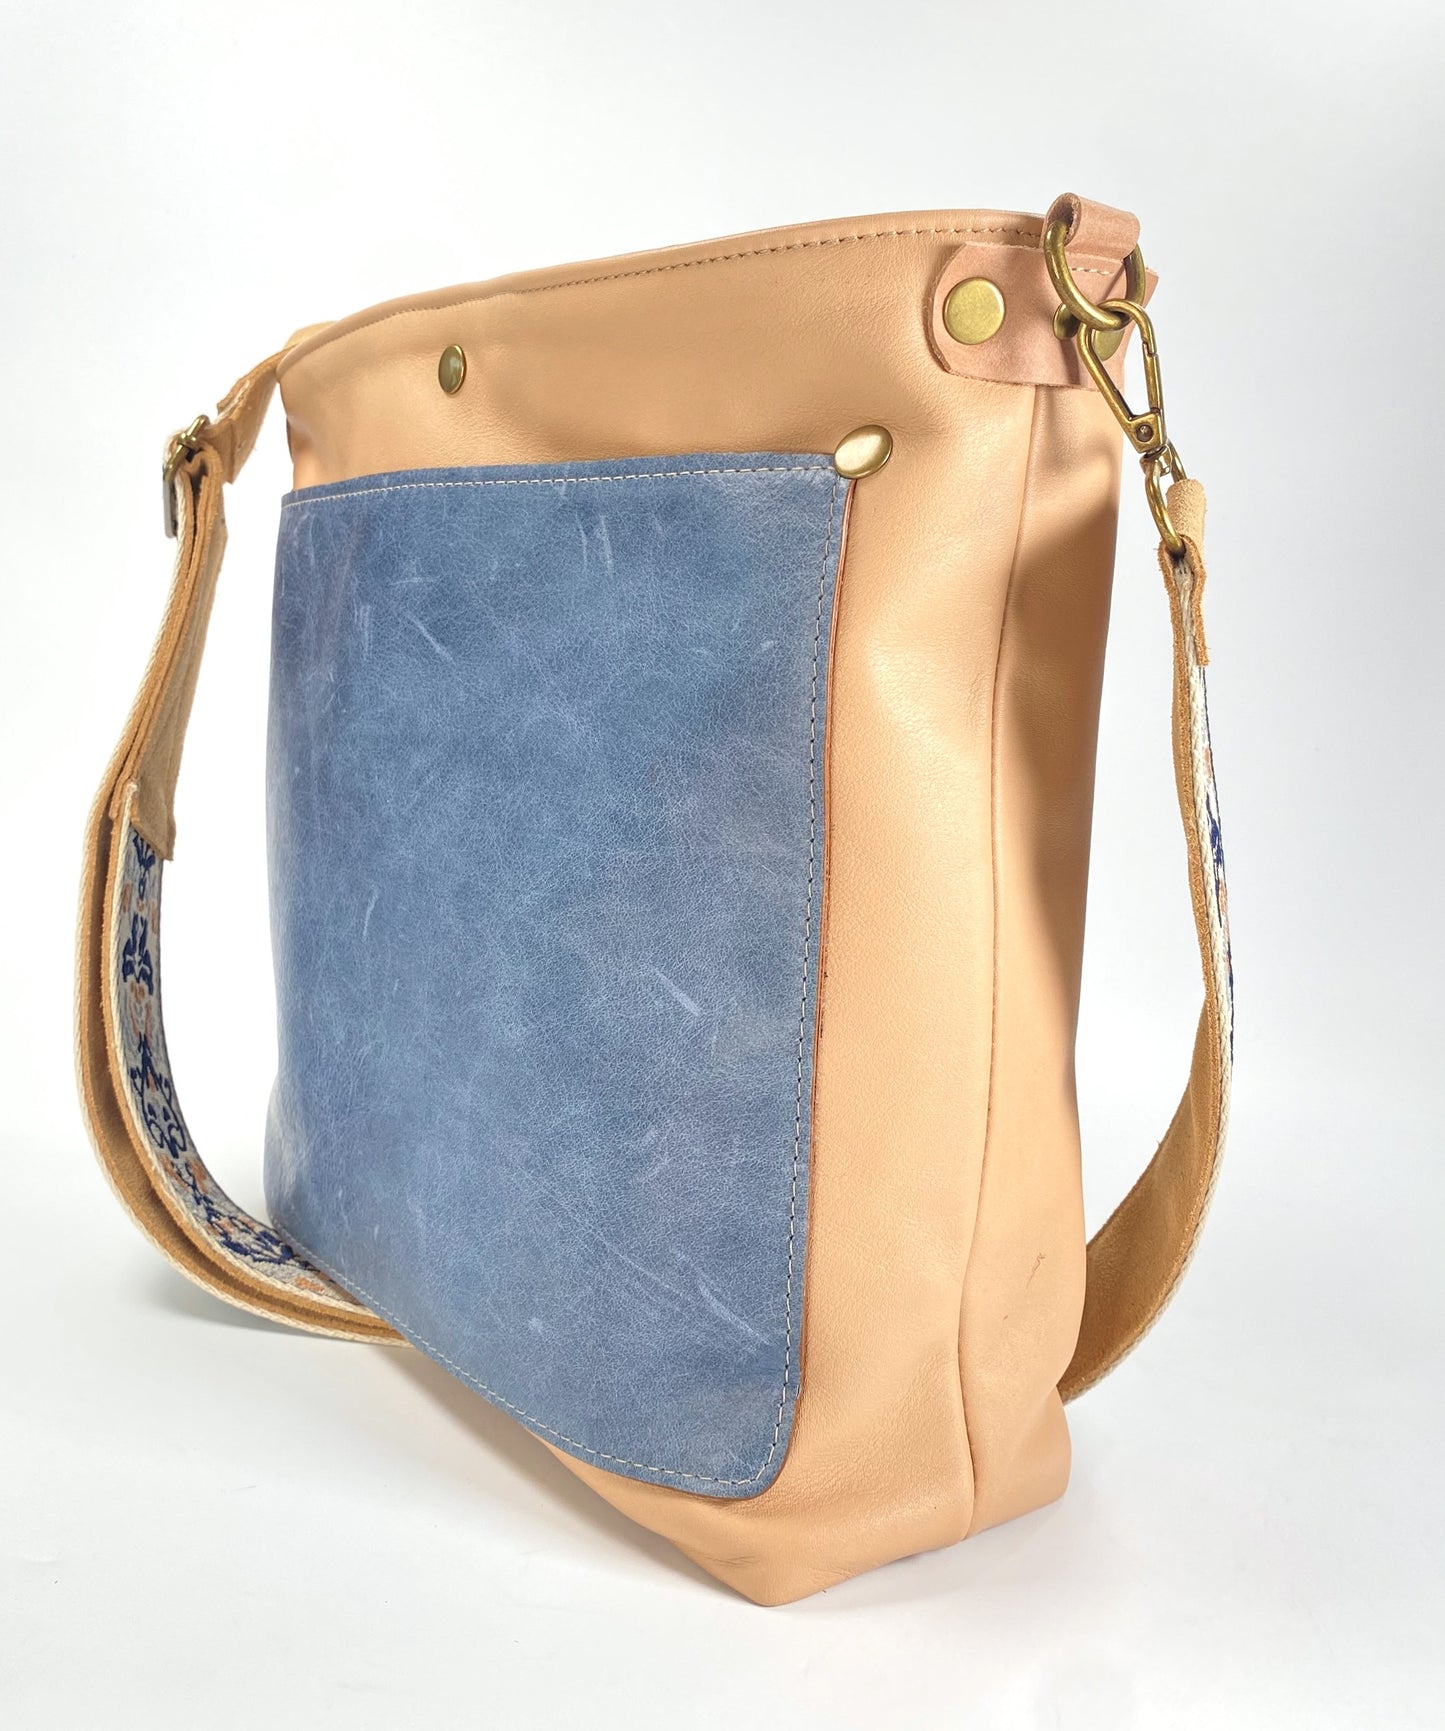 Honey Tan Leather Tote Bag